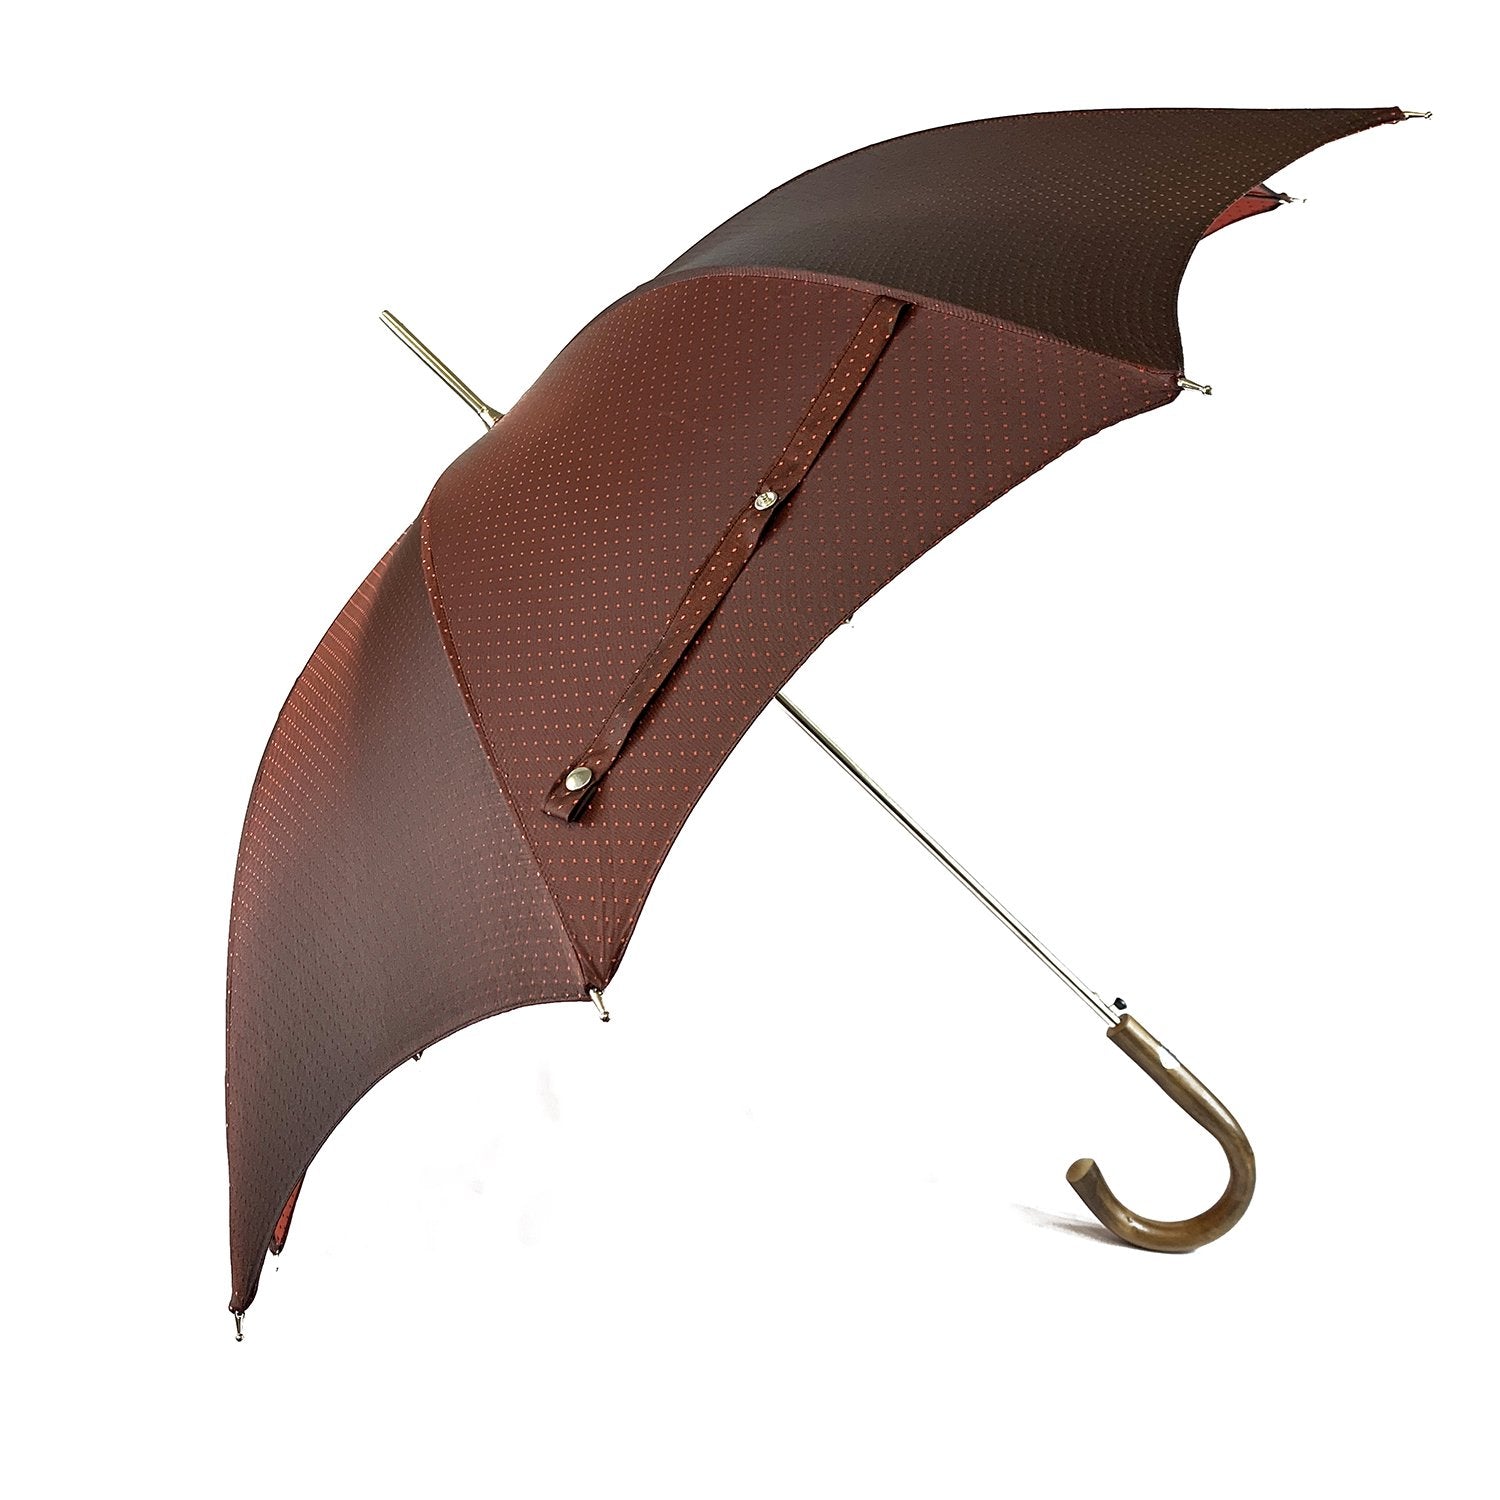 Elegant Burgundy Dot's Umbrella - IL MARCHESATO LUXURY UMBRELLAS, CANES AND SHOEHORNS